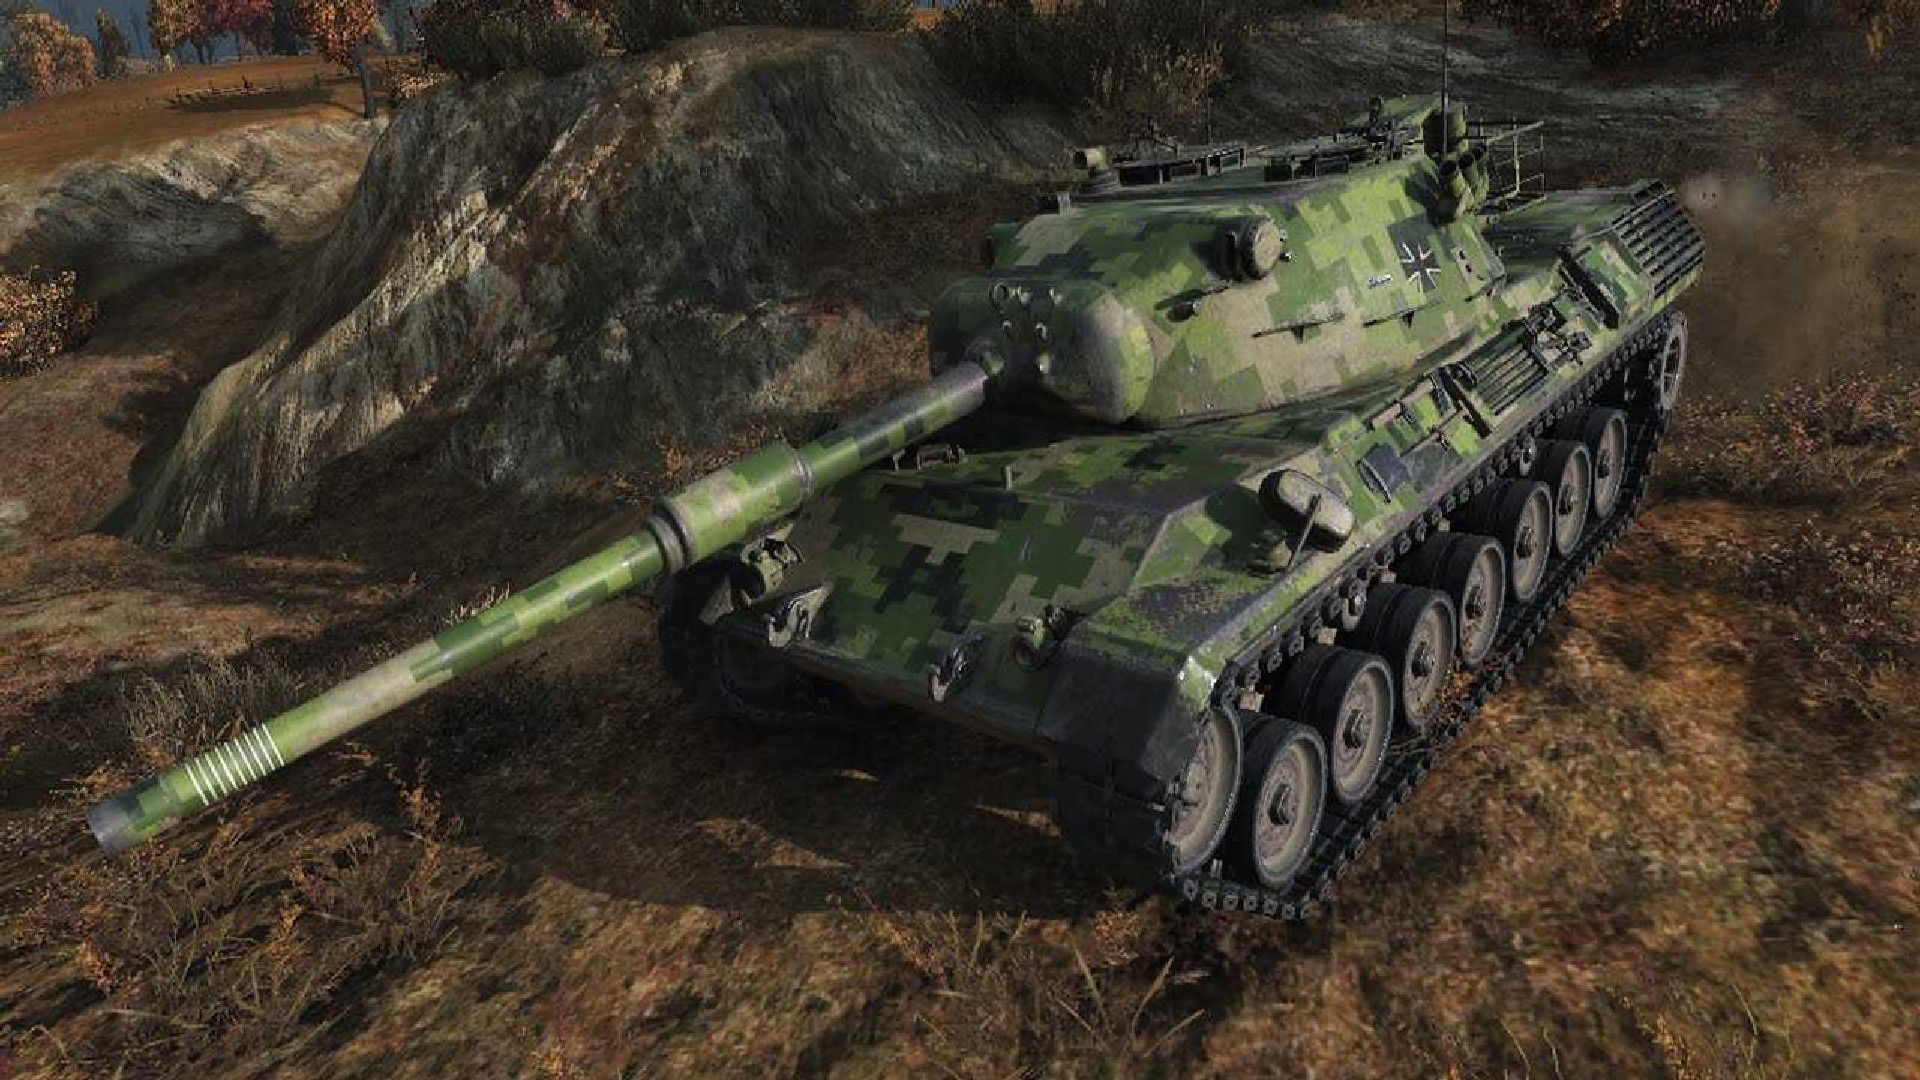 Wor 1. Леопард 1 World of Tanks. Танк Leopard 1 World of Tanks. Леопард танк 2 WOT. Леопард 1 танк WOT Blitz.